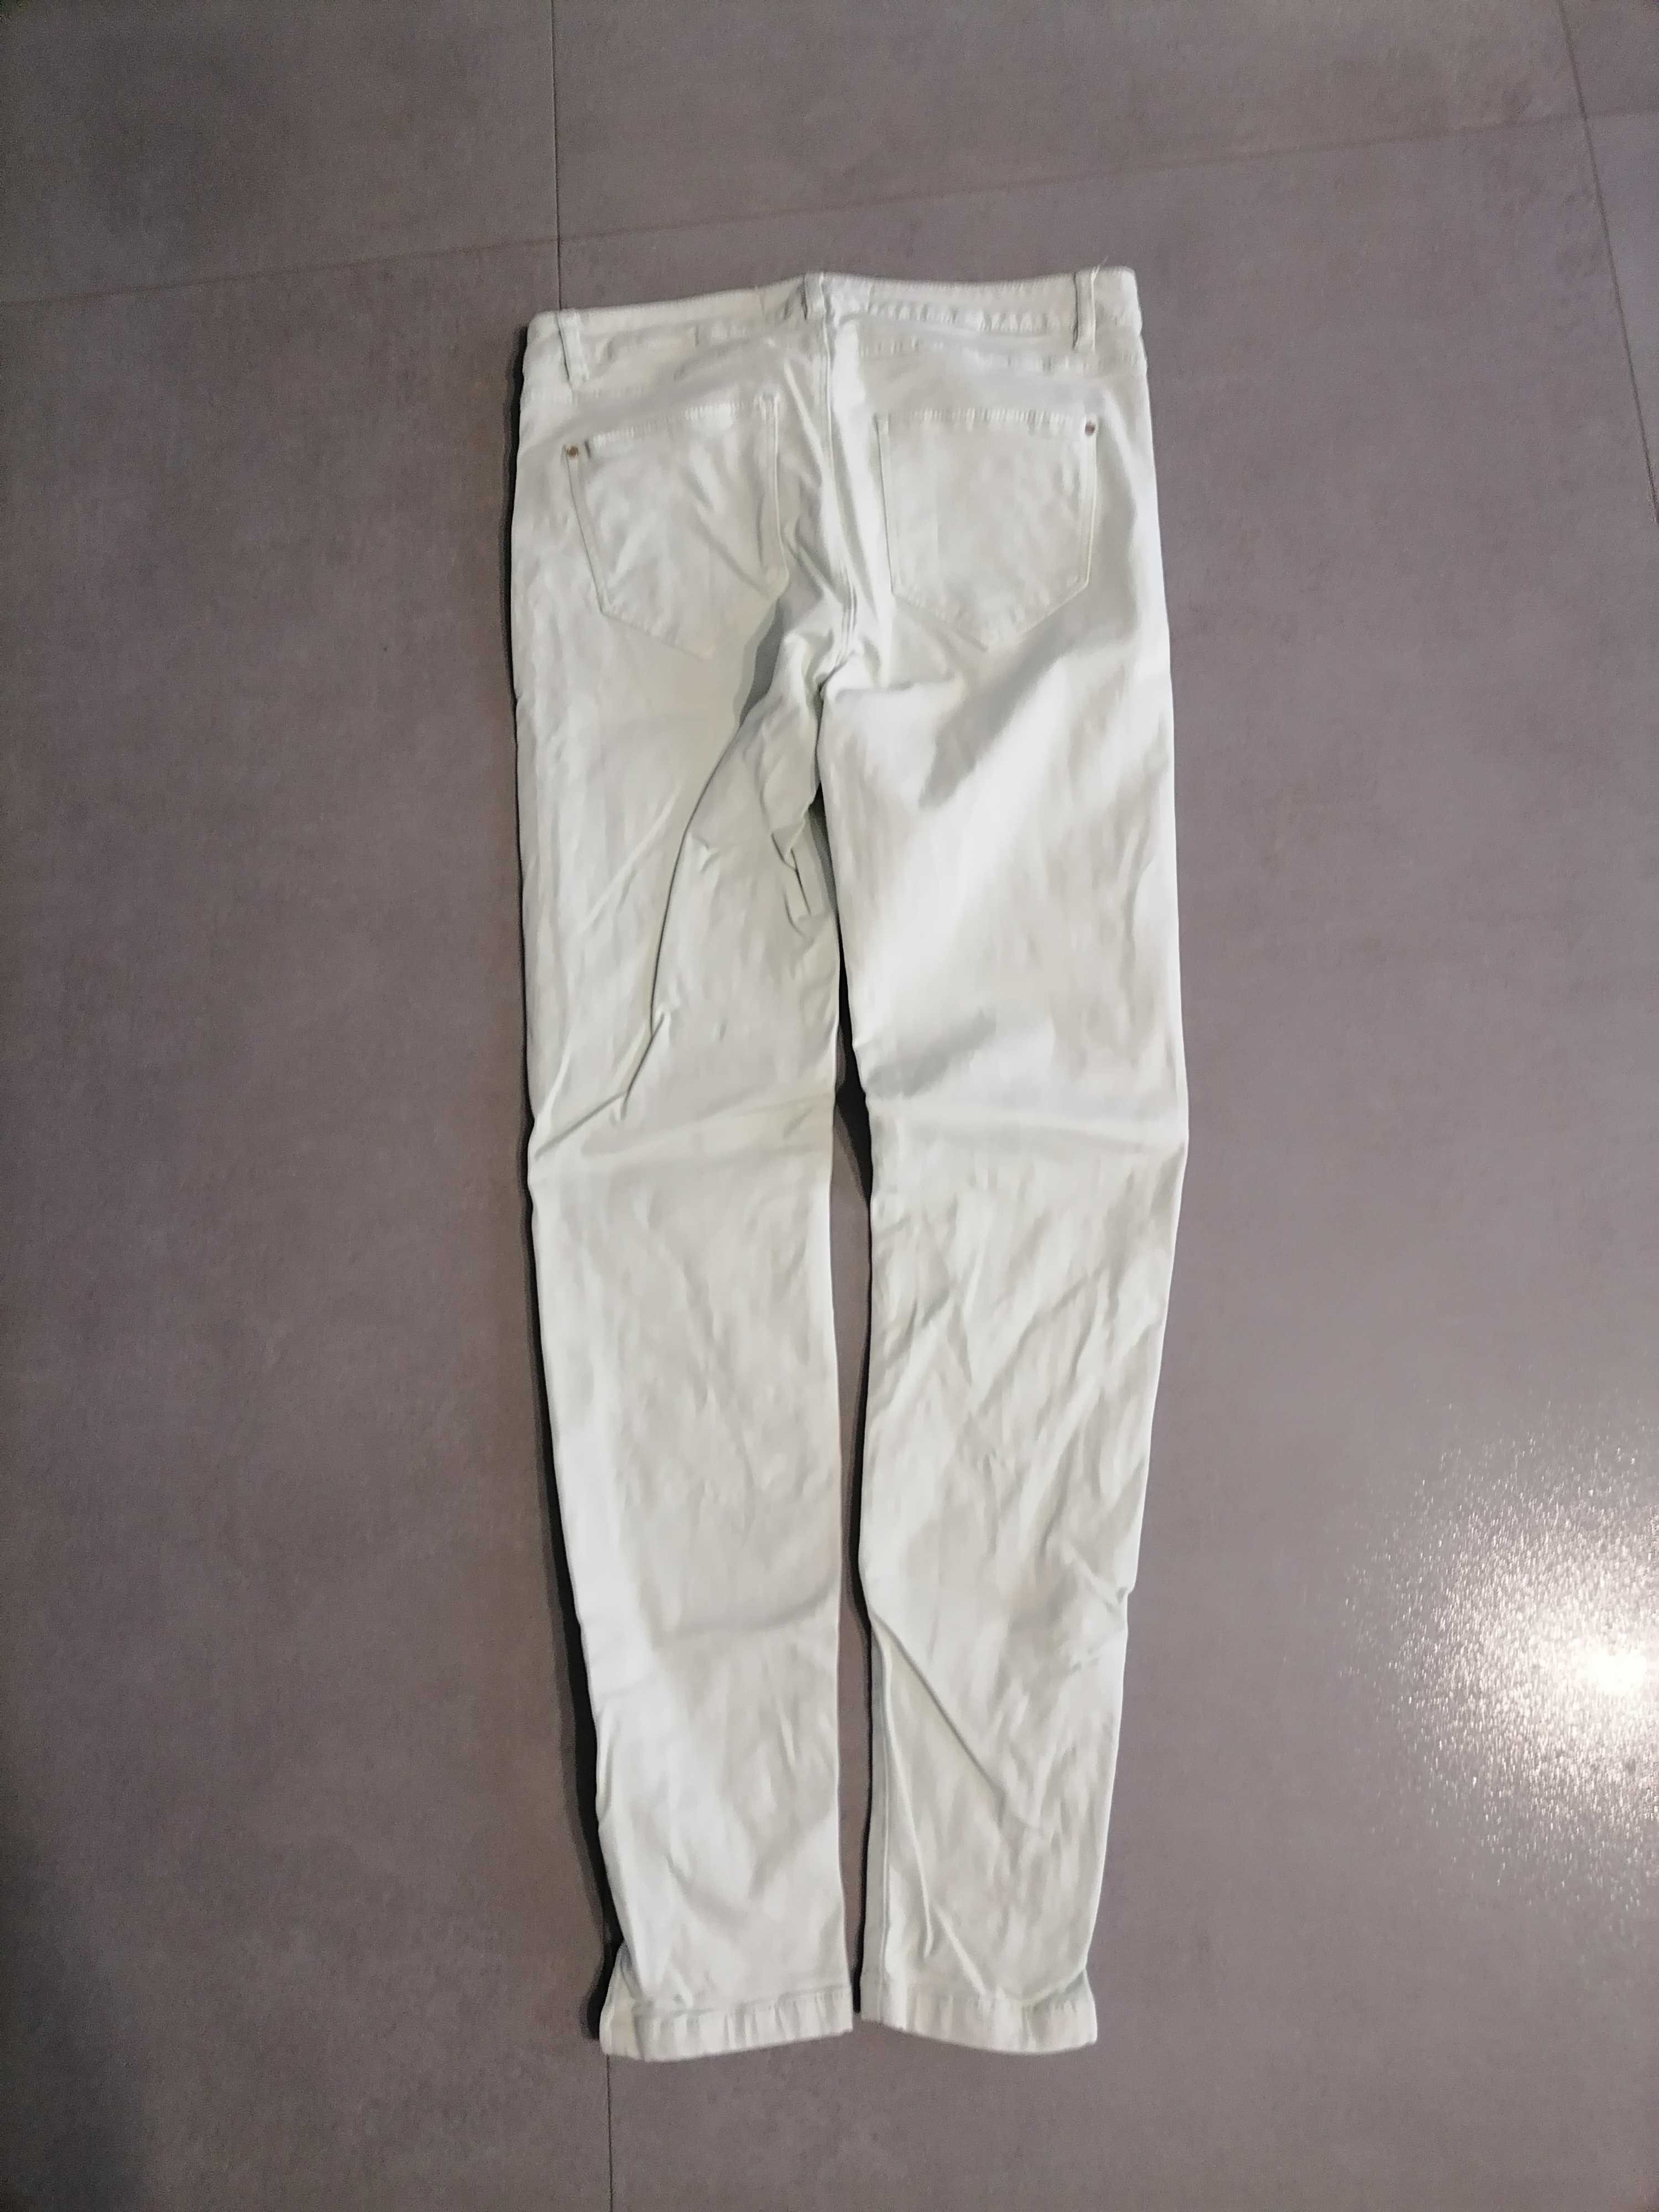 Zara spodnie jeansy skinny  miętowe r 36